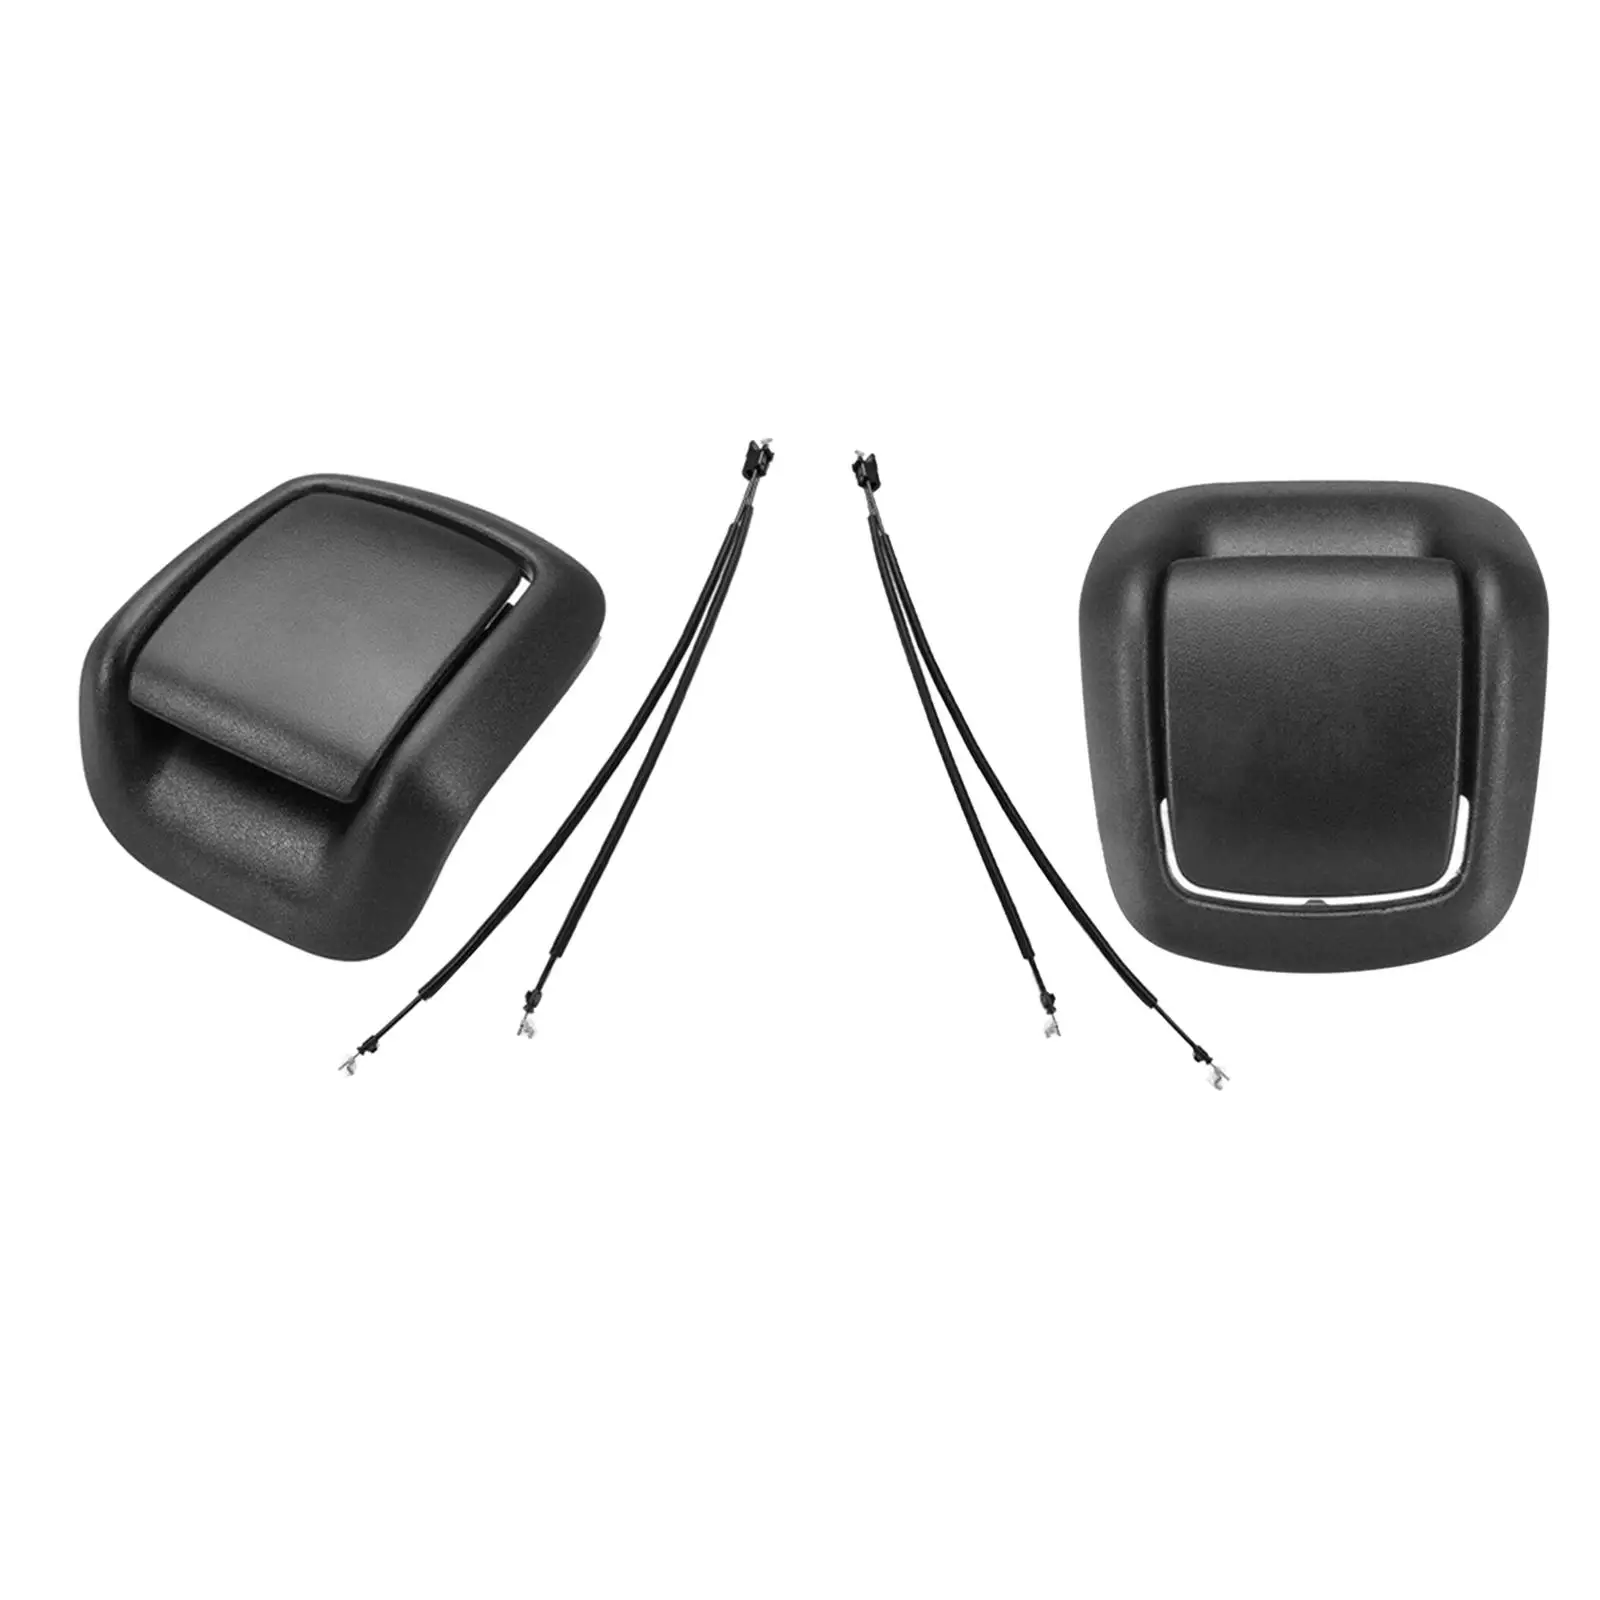 Sturdy Seat Tilt handle Cable Seat Adjustment Handle Cap Front Hand Auto for Fiesta MK6 3 Door Modification Parts